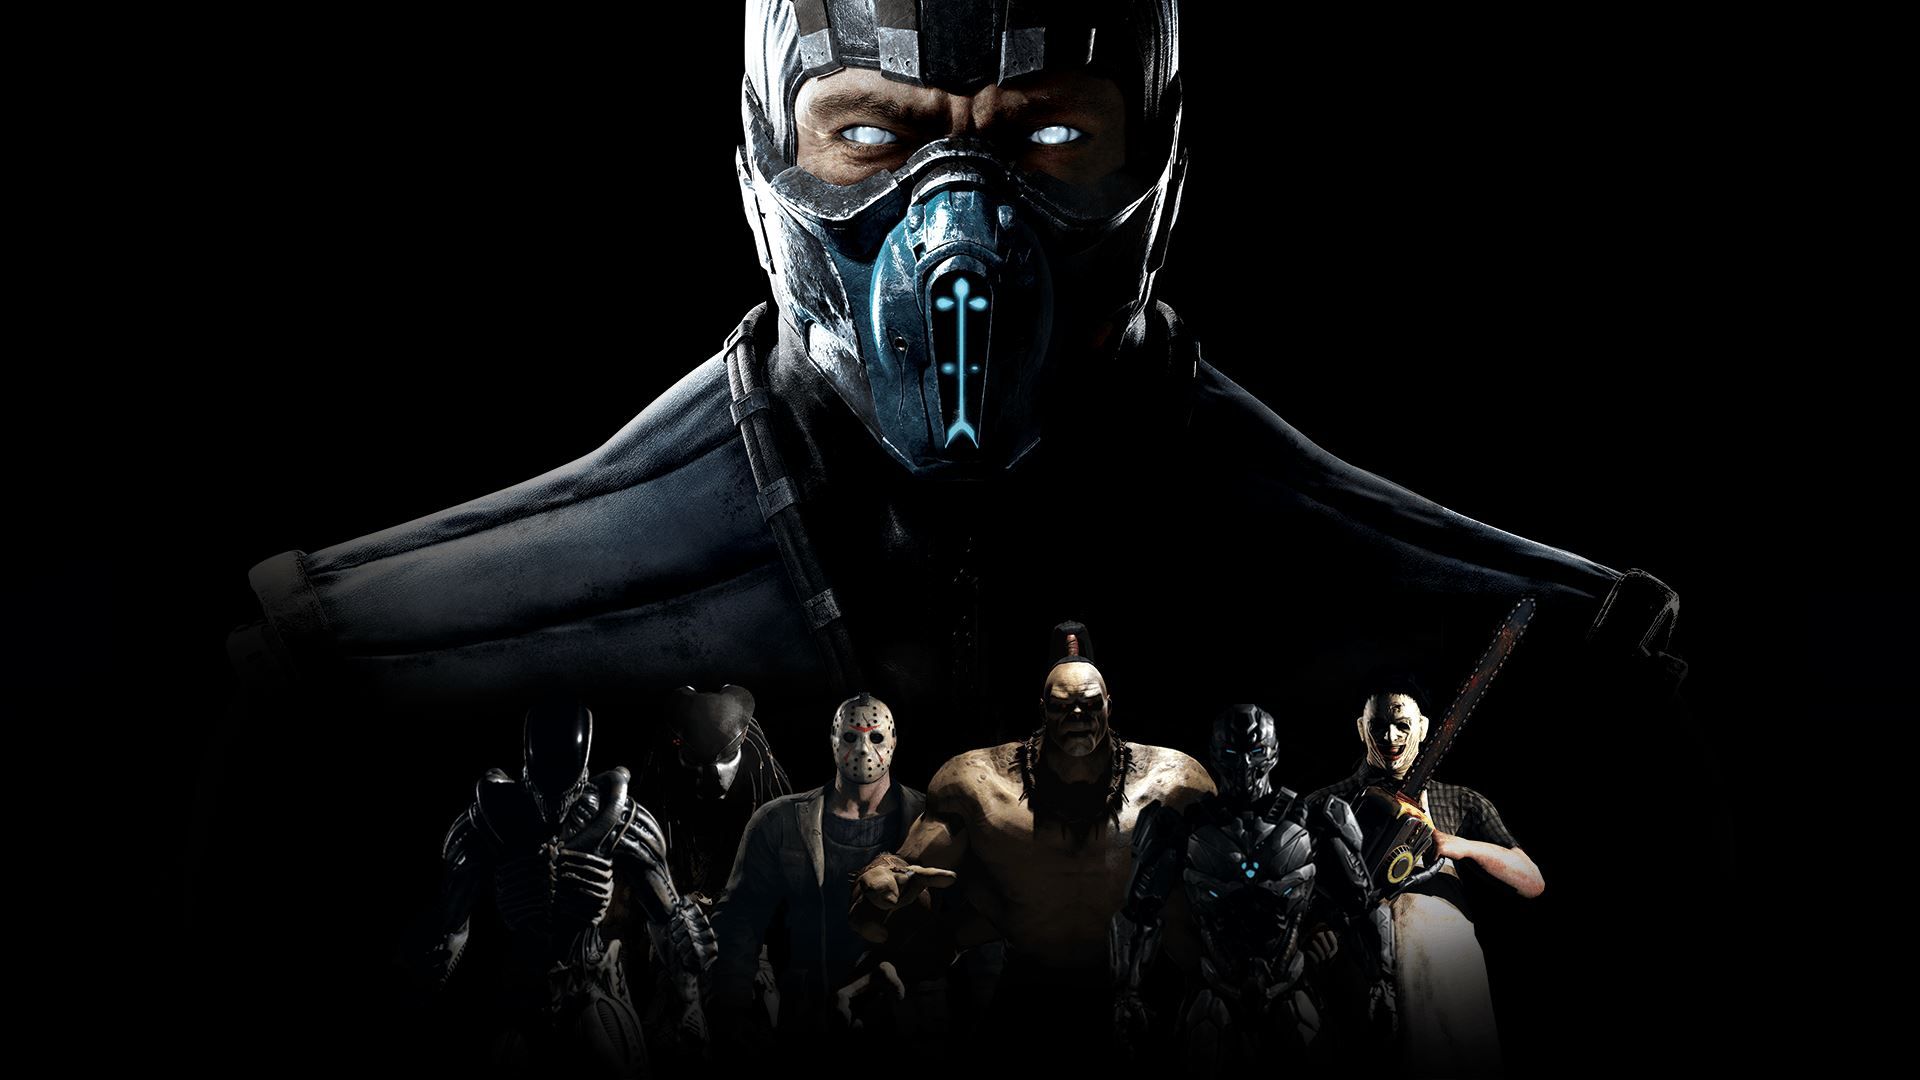 Free download Mortal Kombat X HD Wallpaper and Background Image